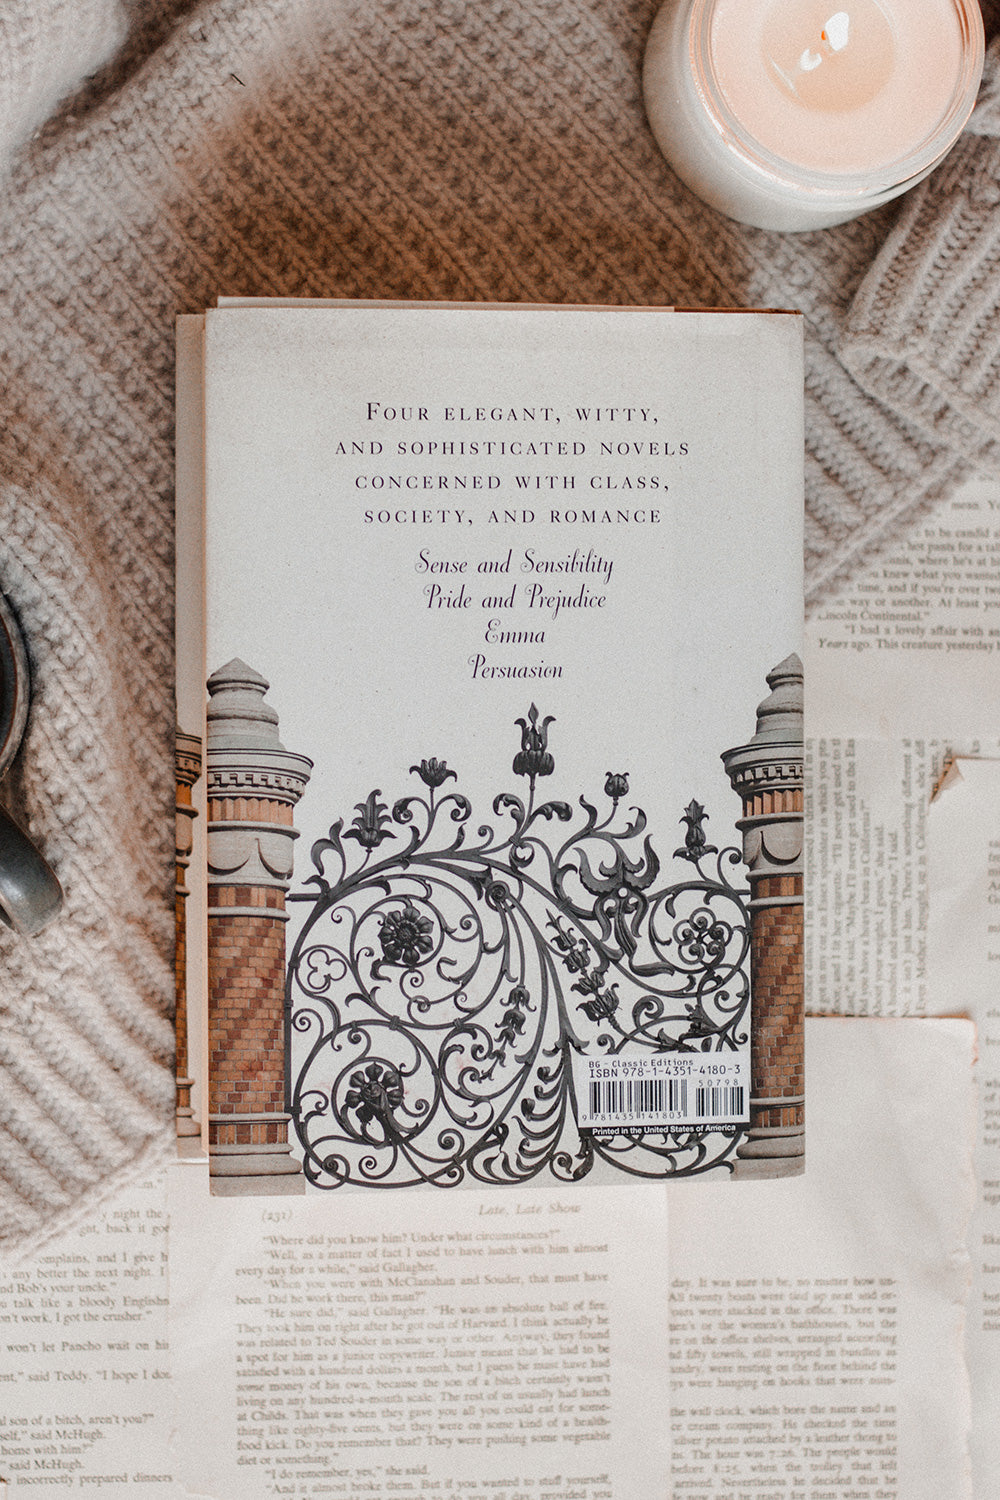 Four Classic Novels by Jane Austen